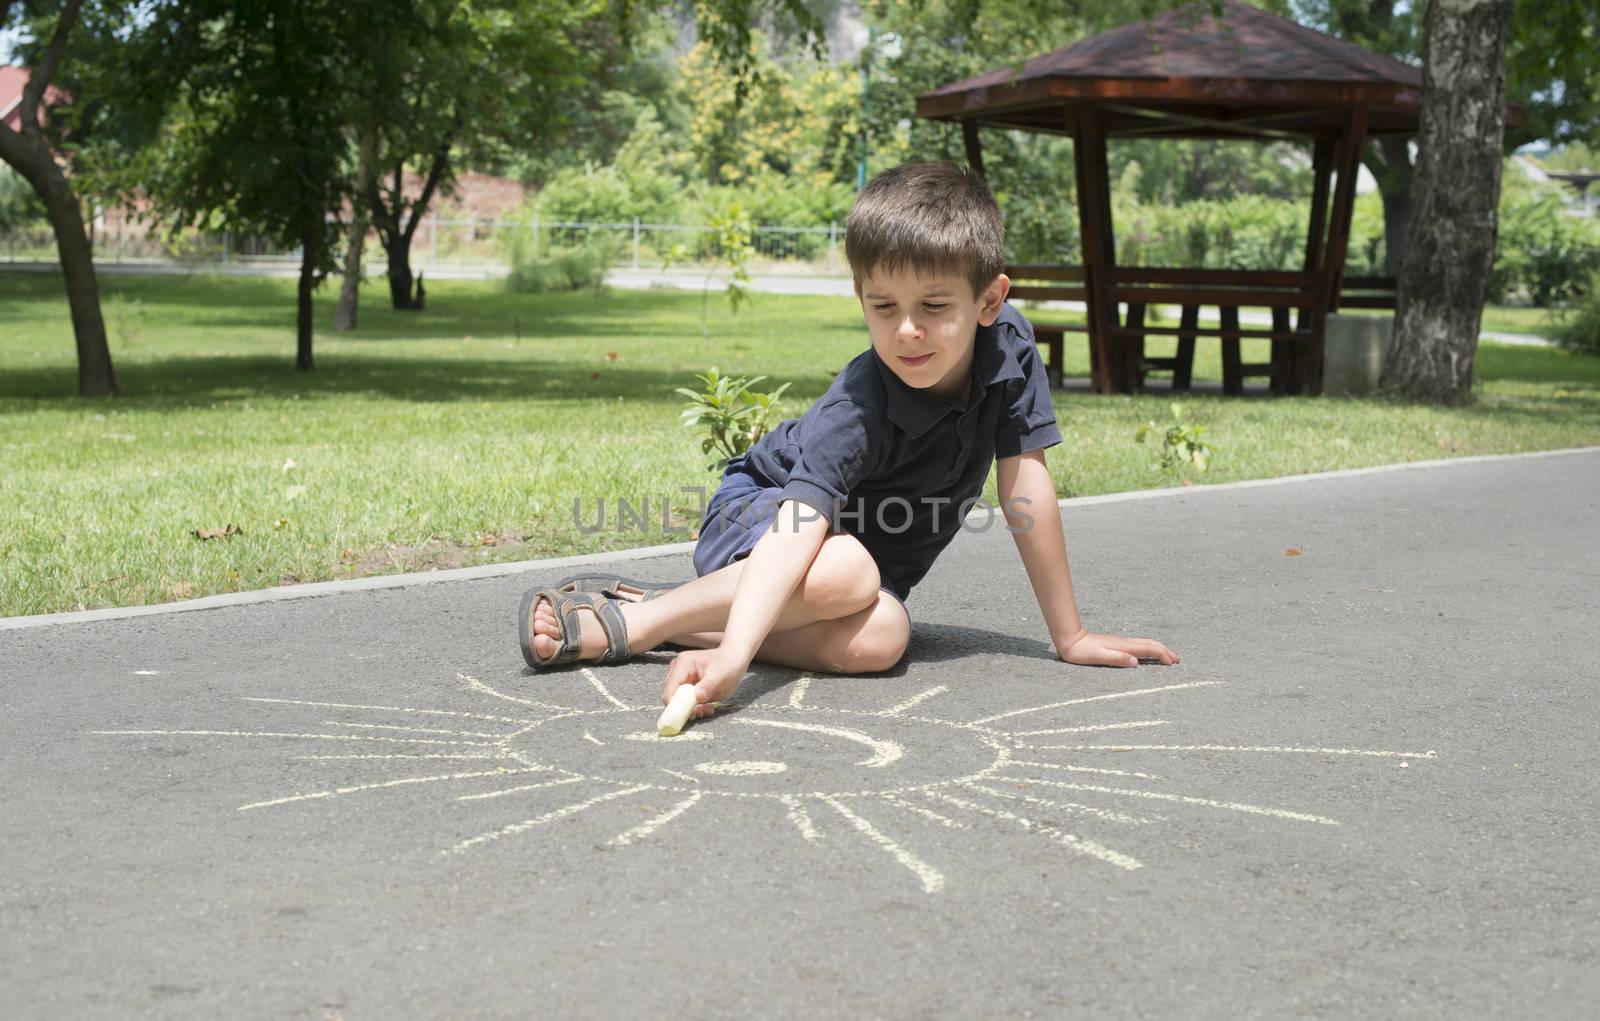 Child drawing sun on asphalt in a park